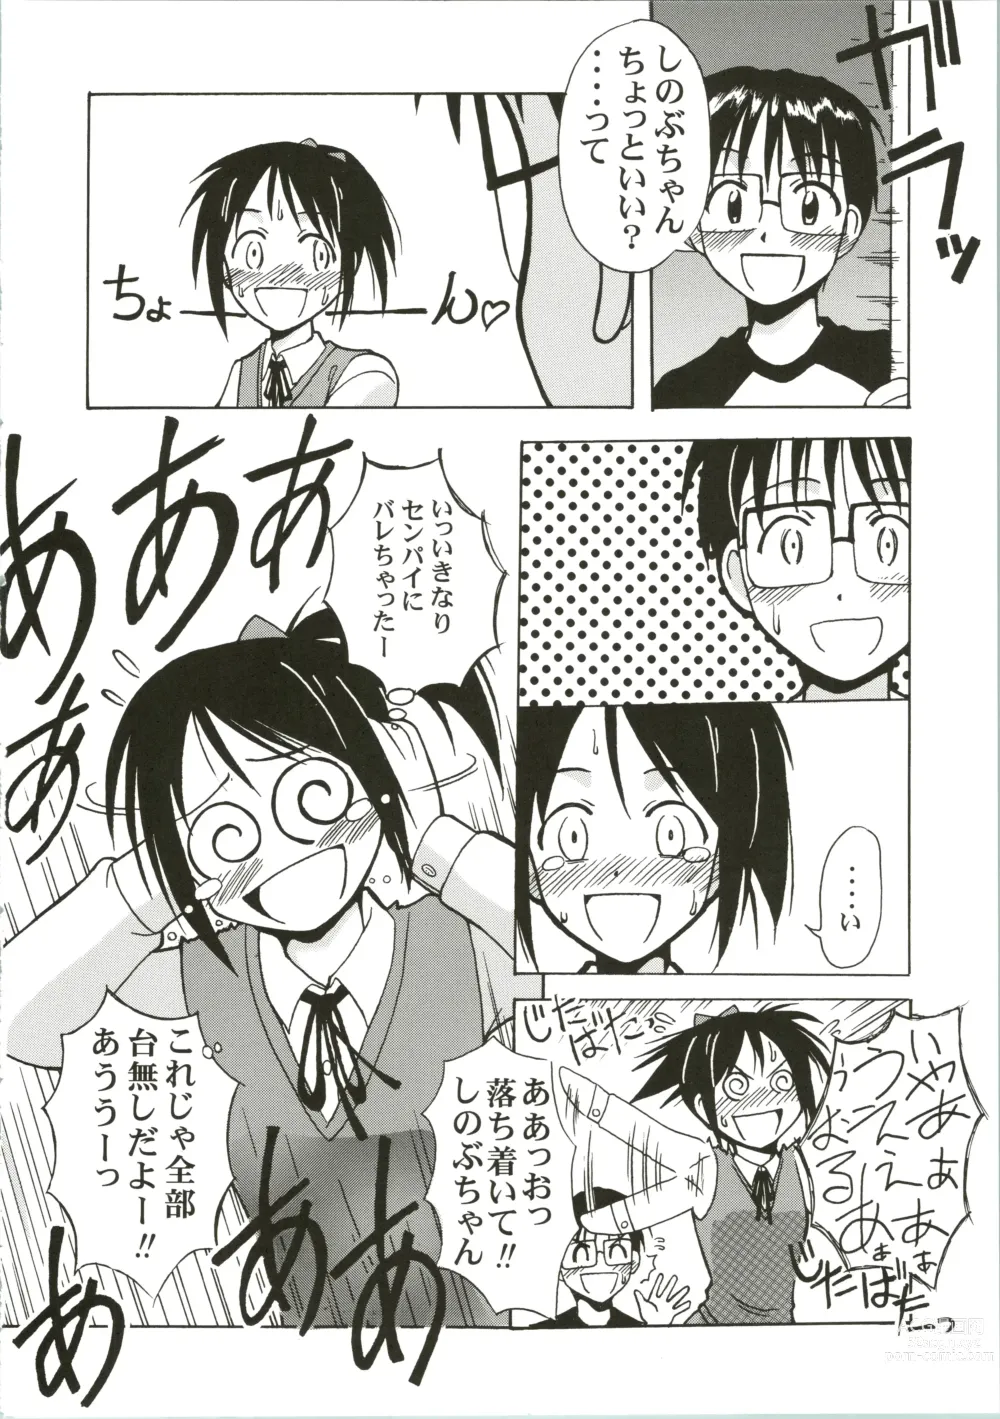 Page 10 of doujinshi Shinobu SP.